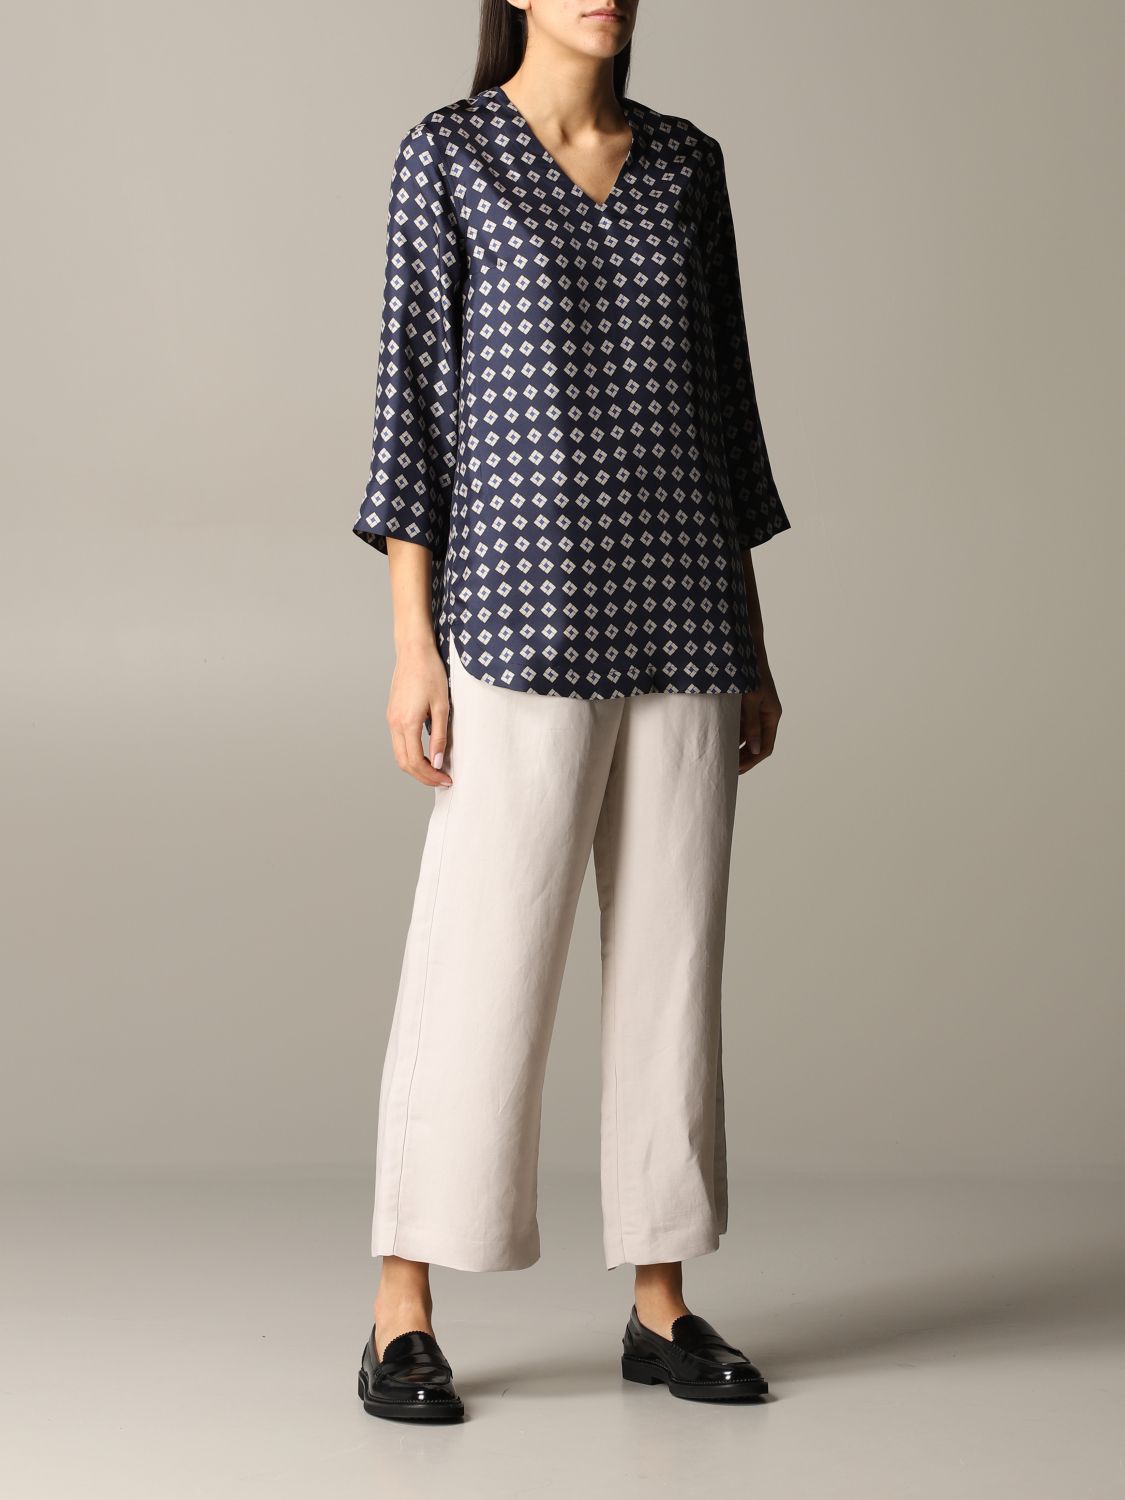 S Max Mara Outlet: Finito blouse in patterned silk | Shirt S Max Mara ...